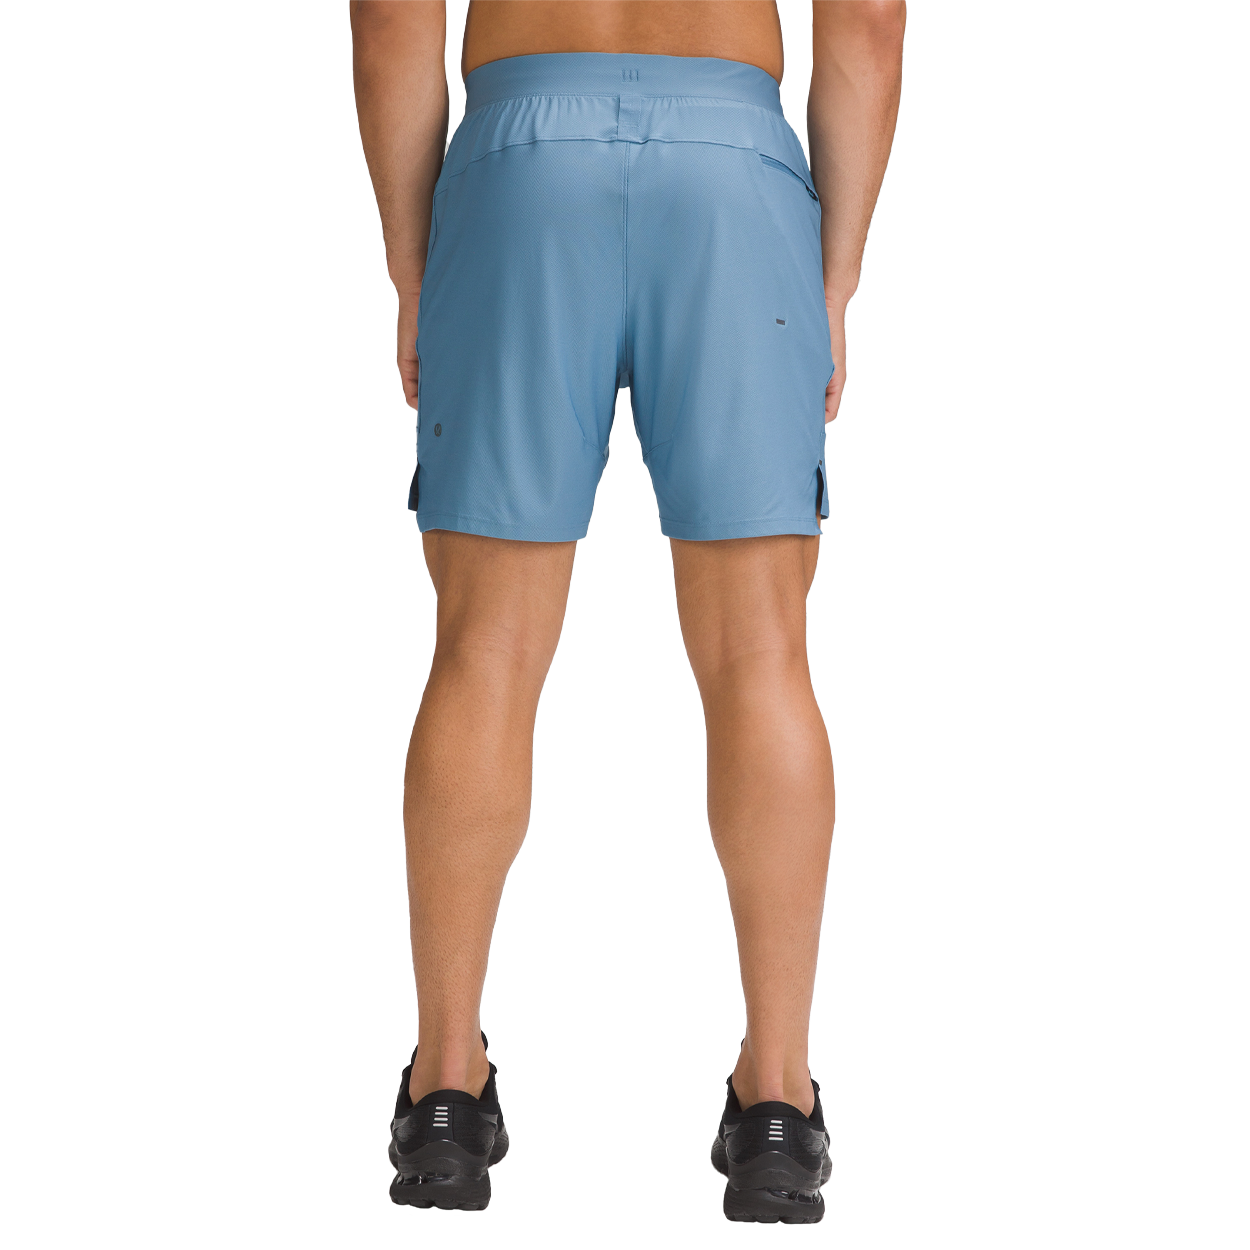 Liner Shorts 7 - HolStrength